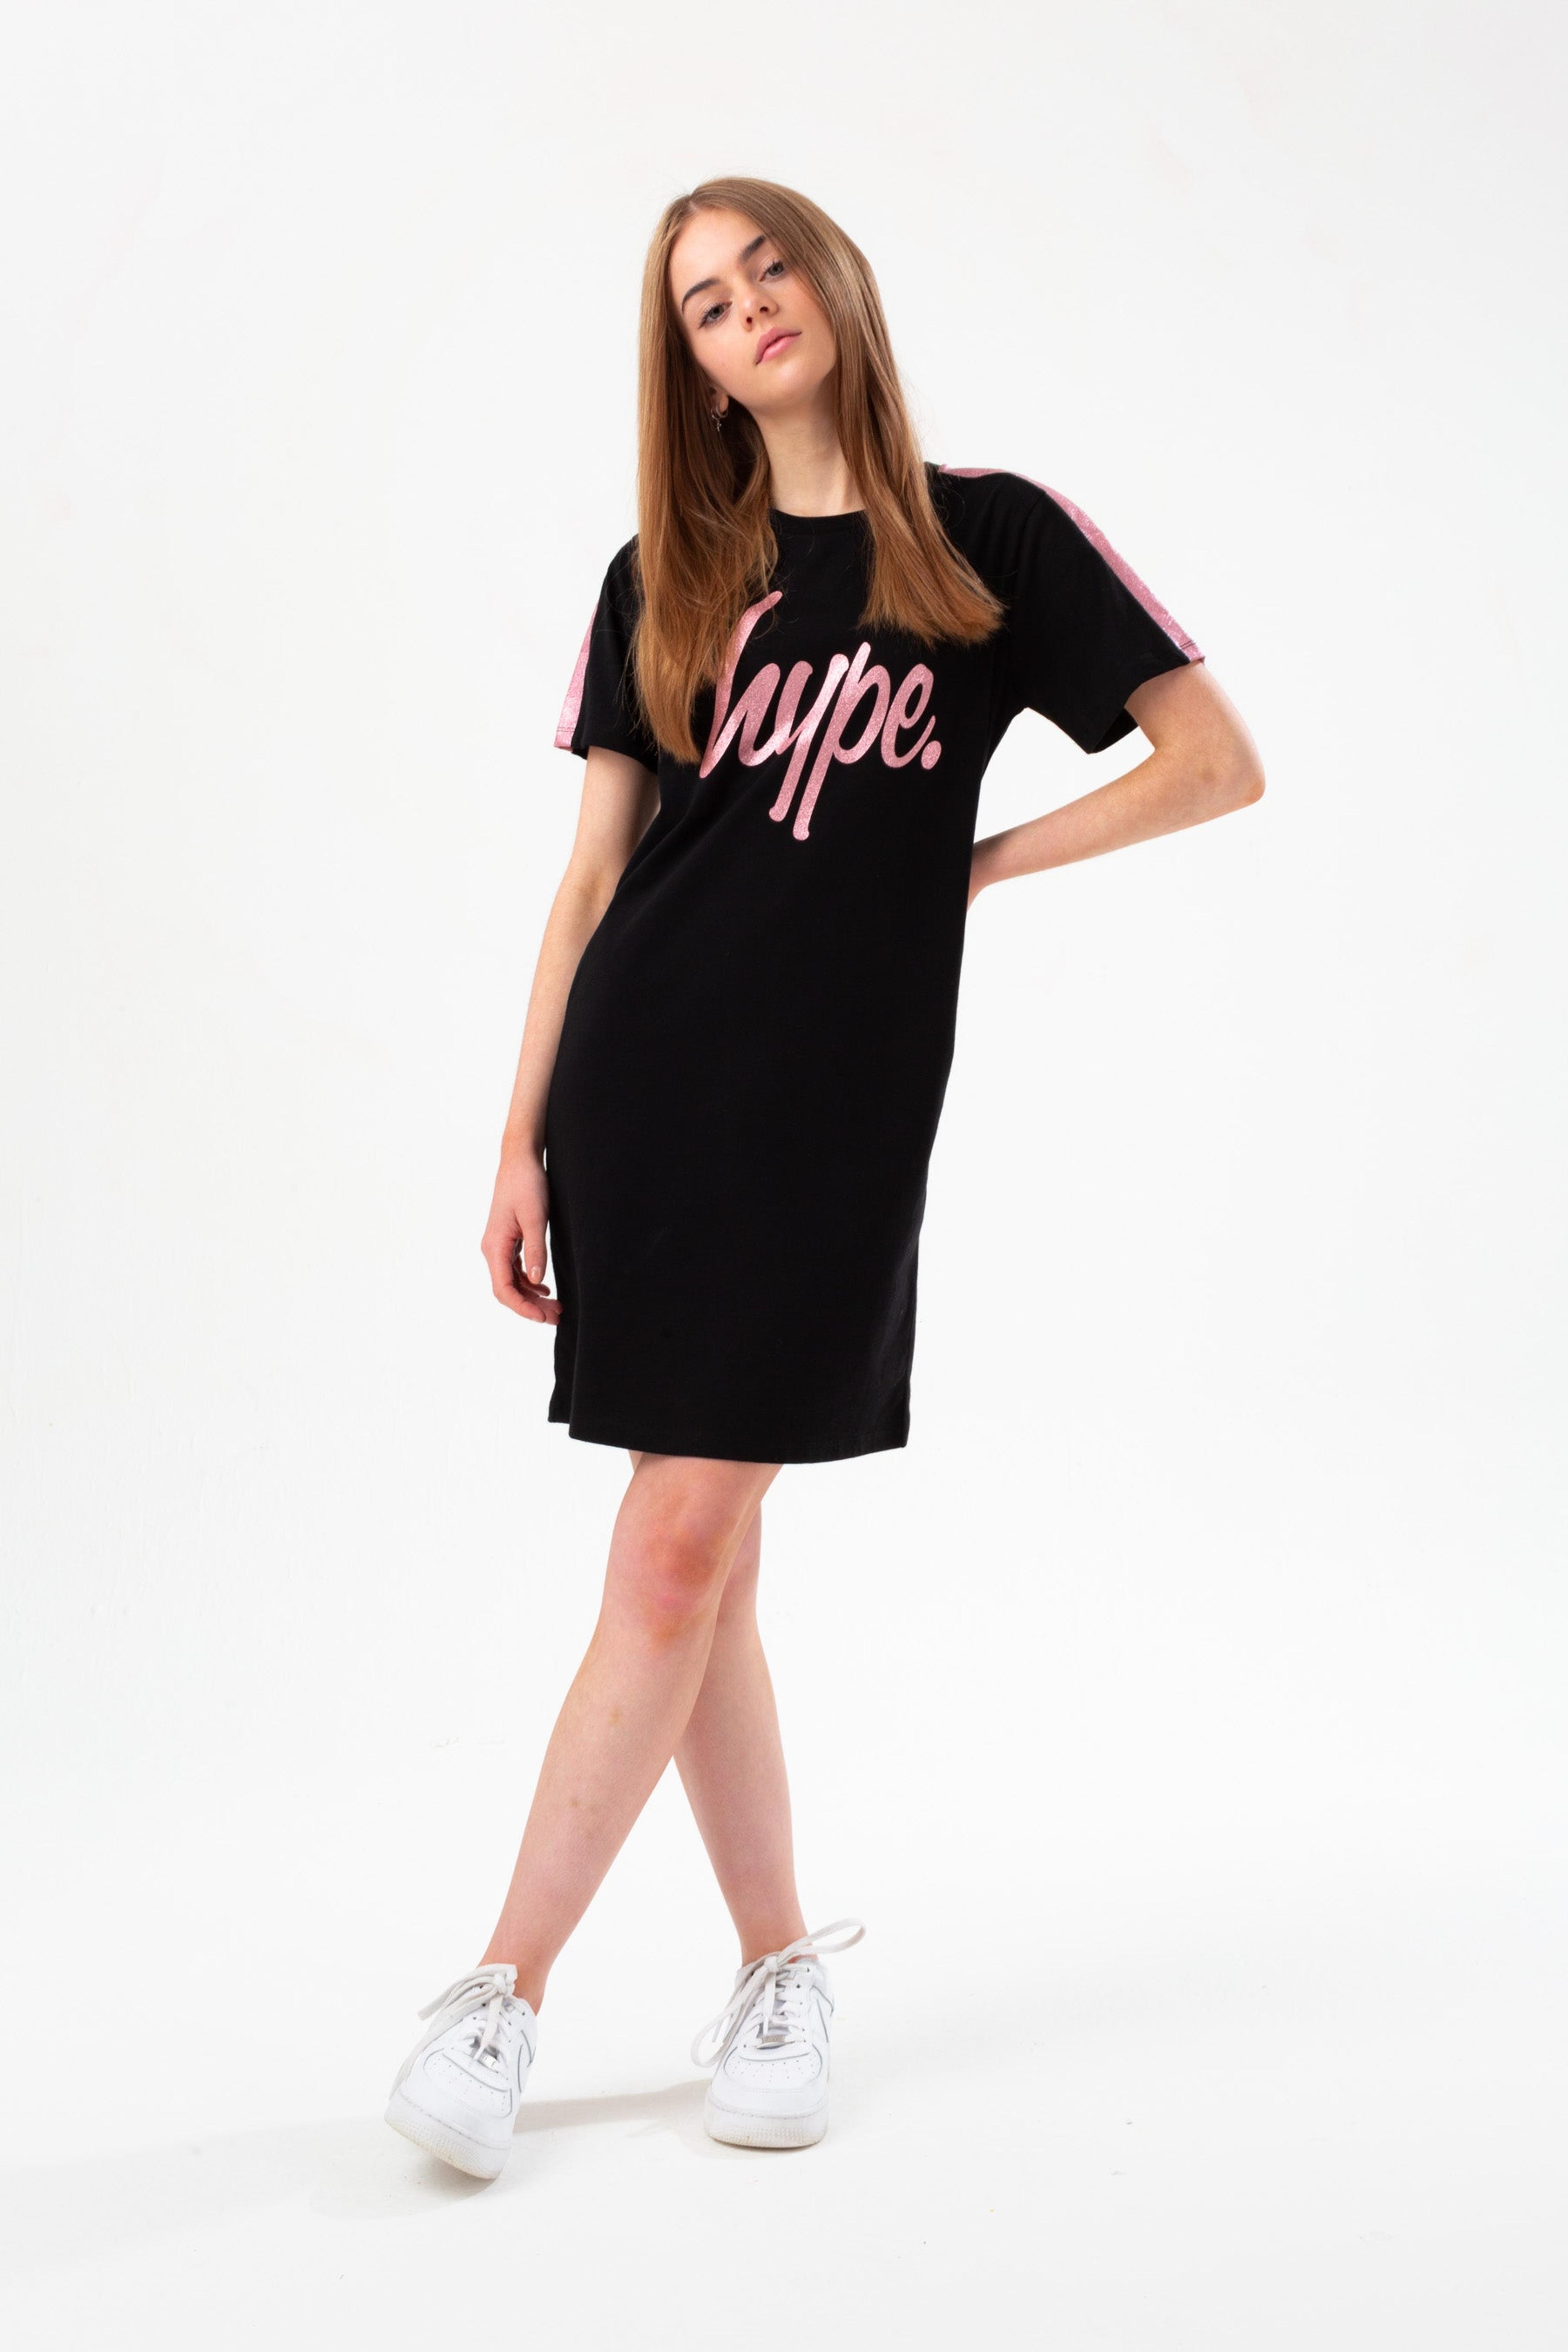 Alternate View 1 of HYPE GIRLS BLACK PINK PANEL SCRIPT T-SHIRT DRESS